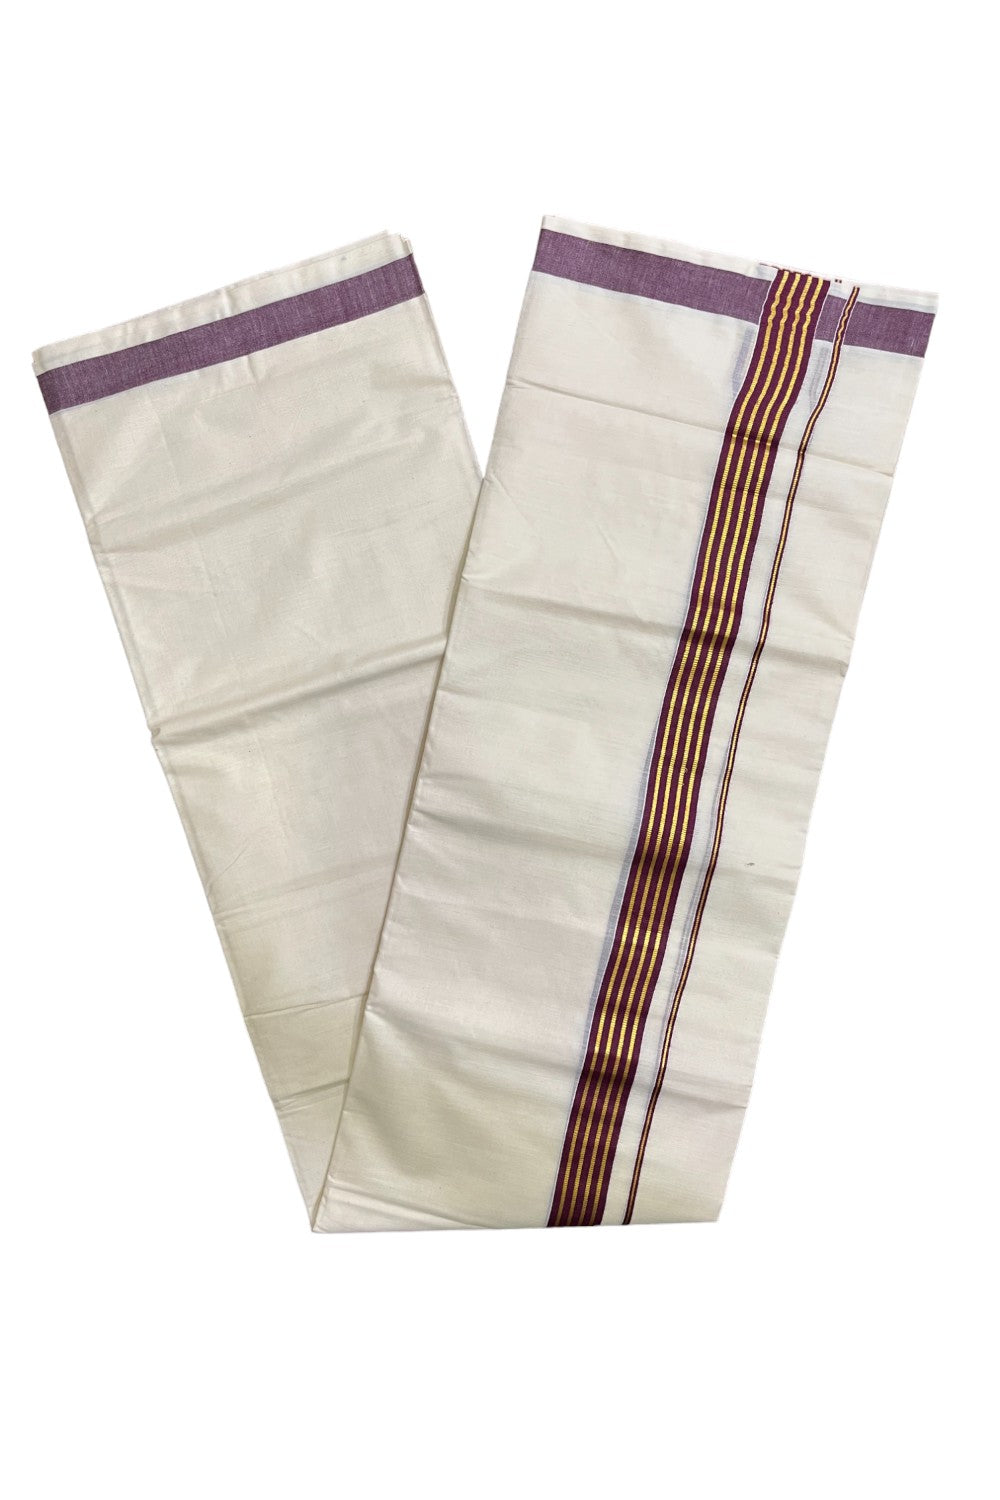 Kerala Pure Cotton Double Mundu with Purple and Kasavu Lines Border (South Indian Kerala Dhoti)